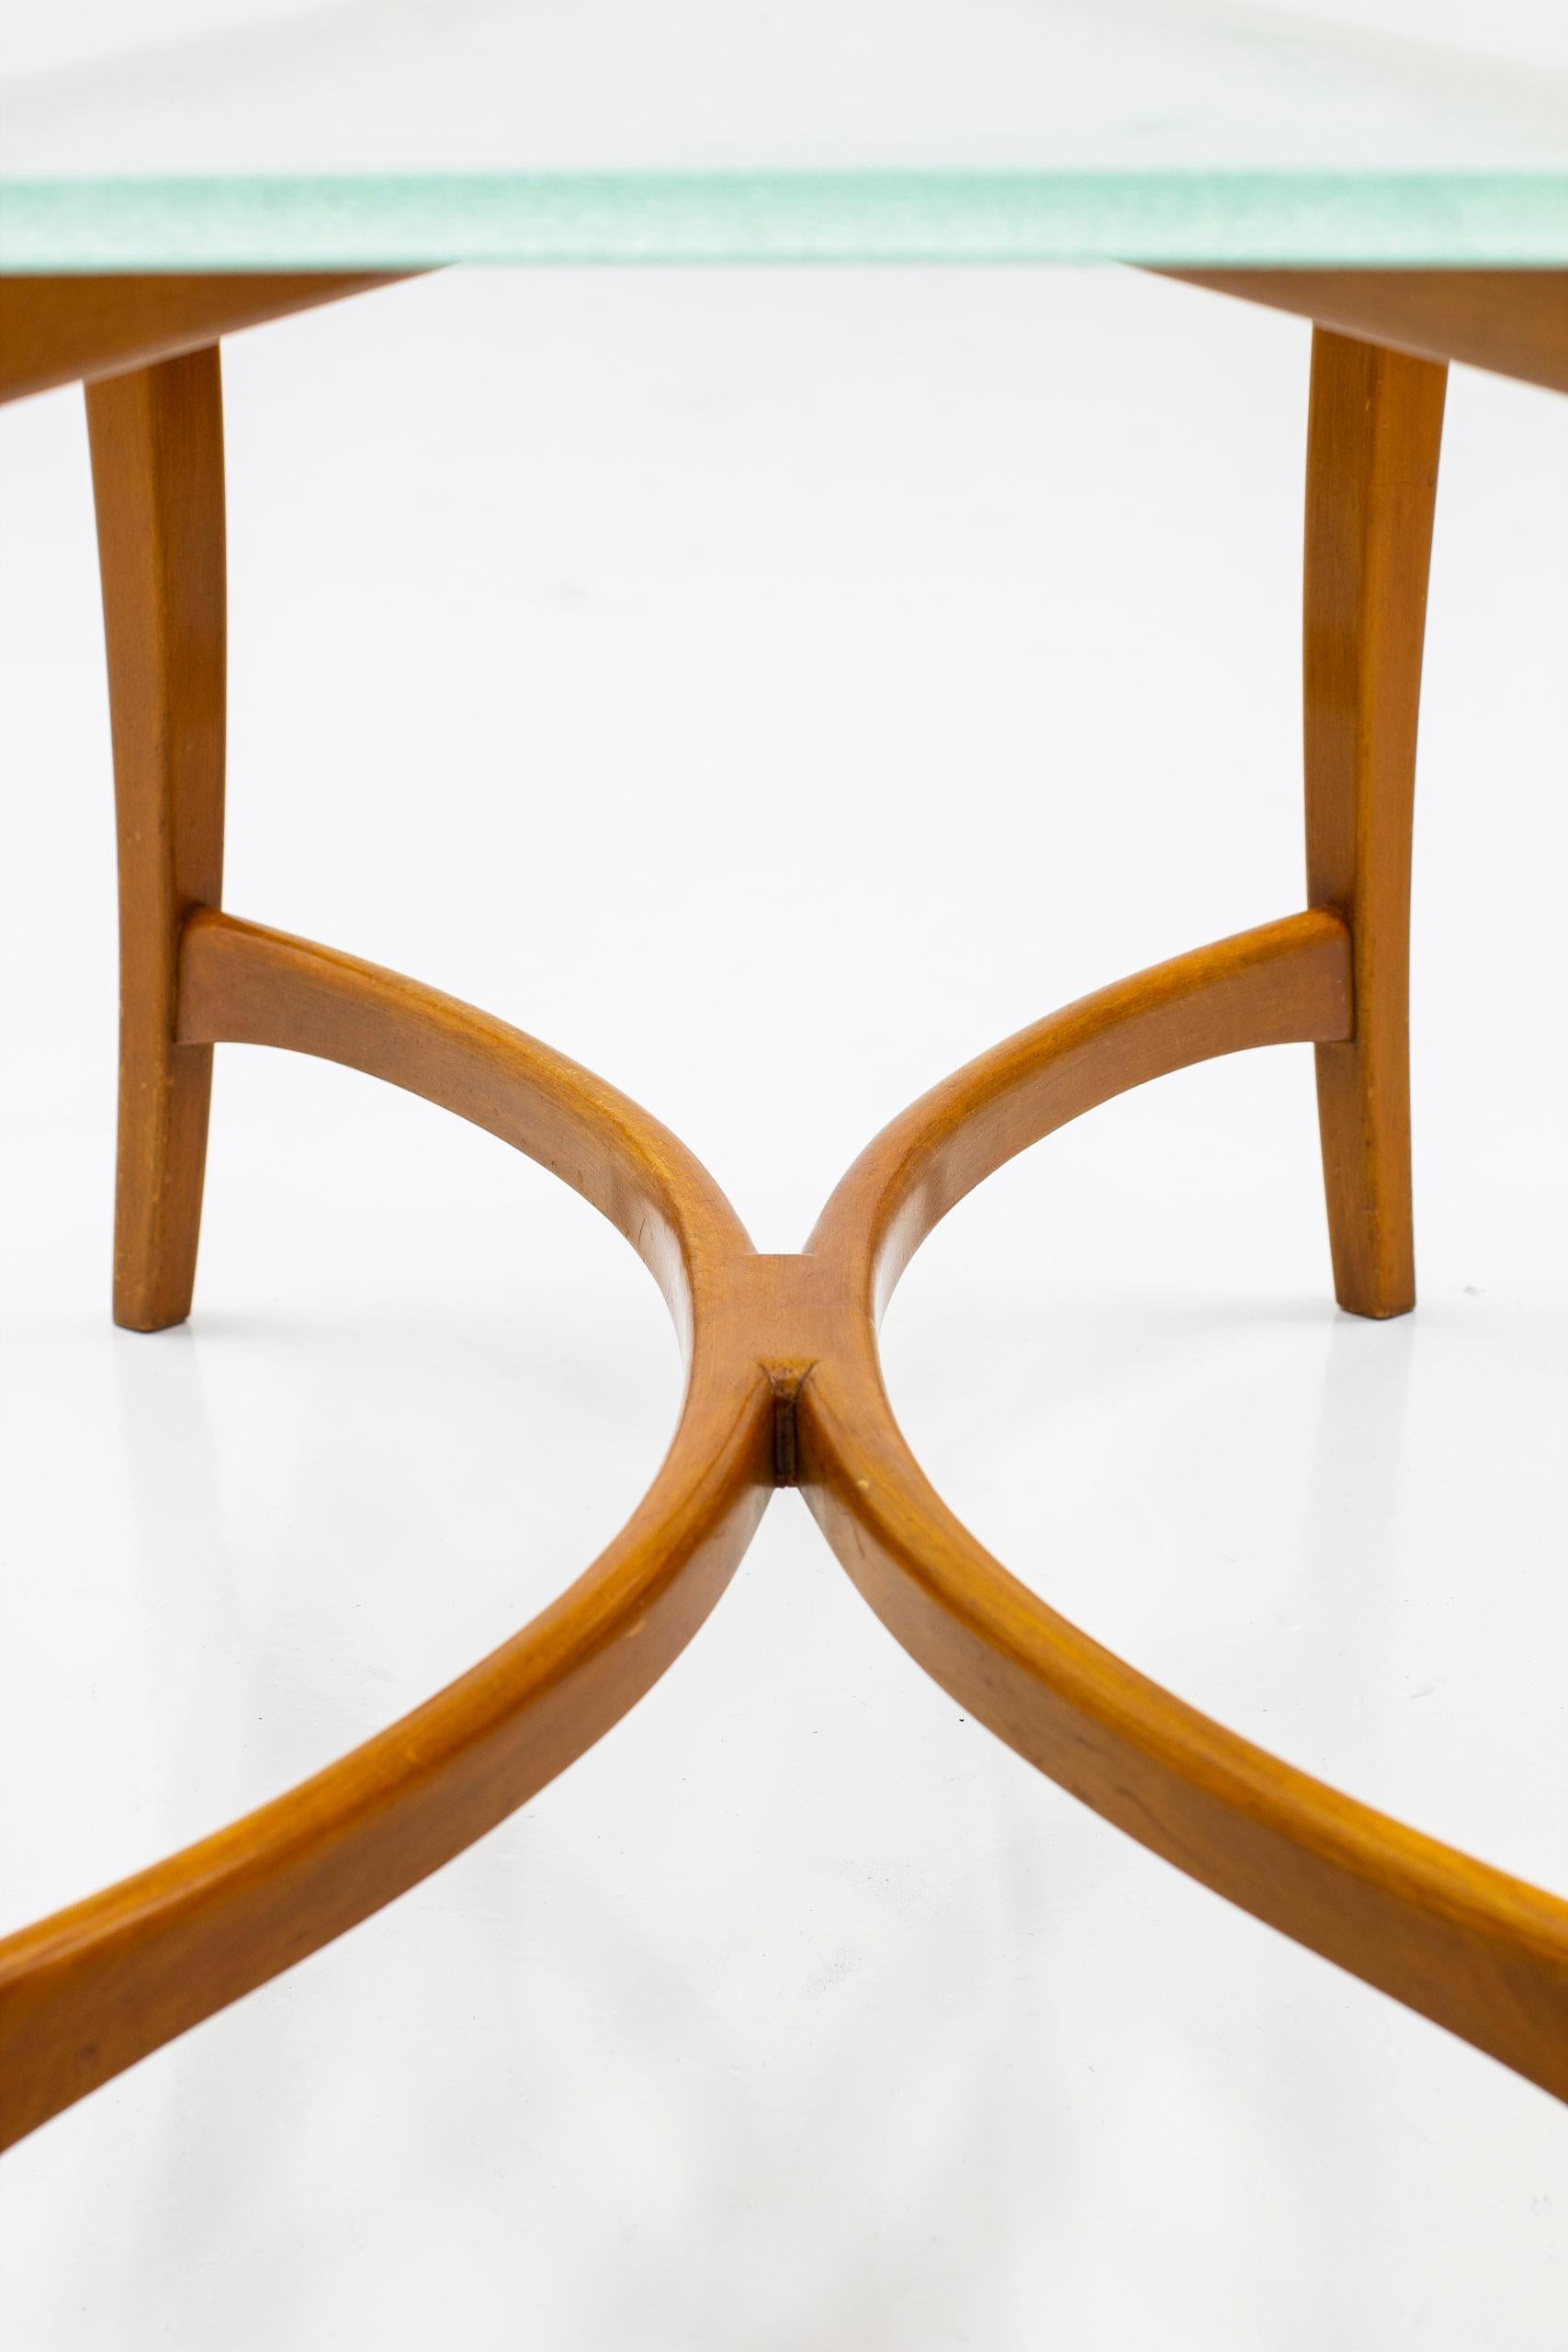 Swedish Modern Wood and Glass Sofa Table by Nordiska Kompaniet, Sweden, 1939 For Sale 2